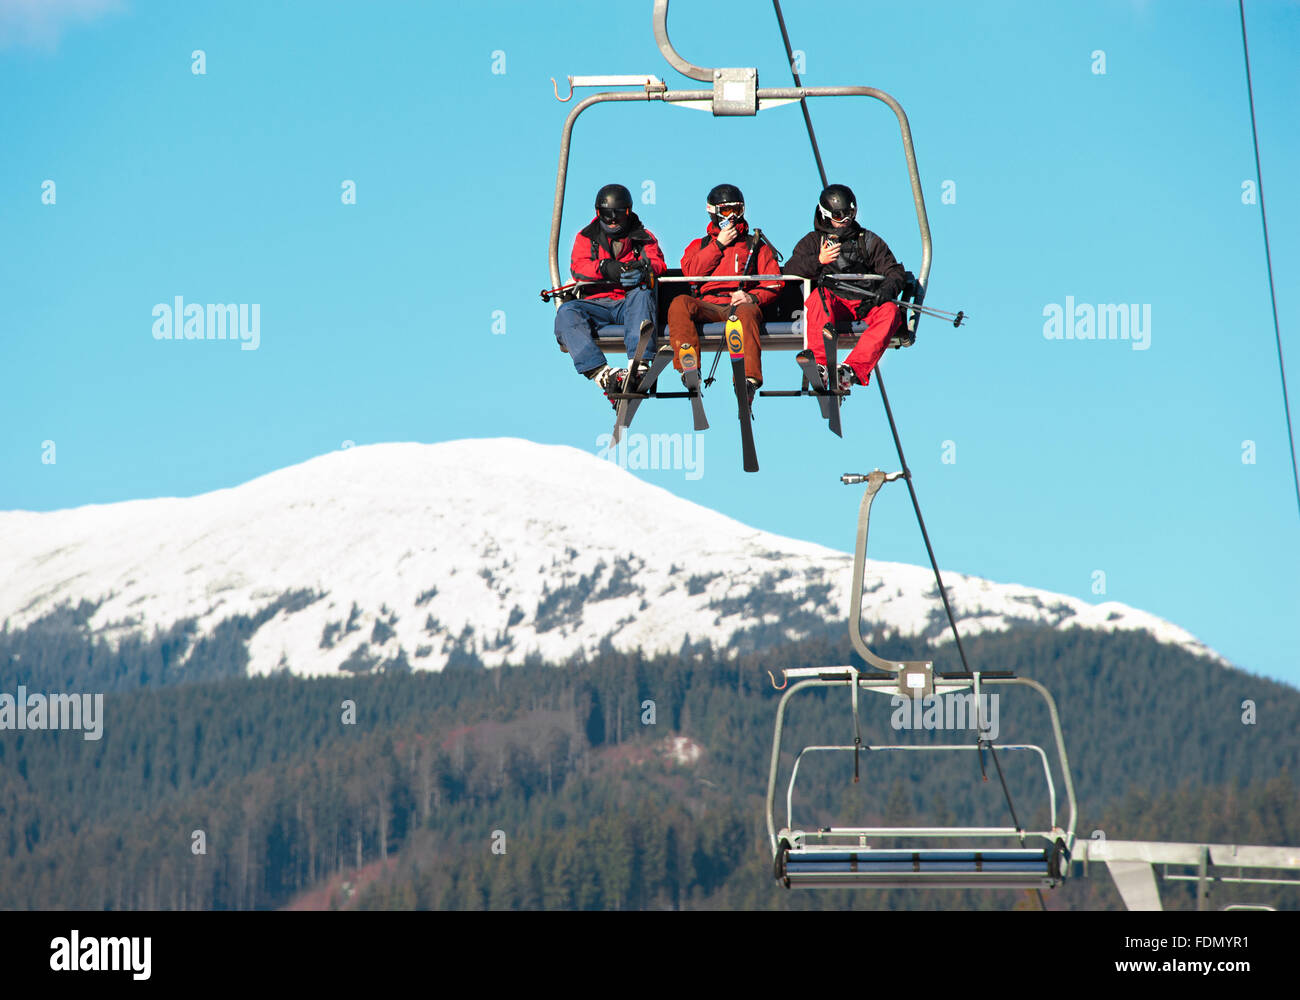 Skiers on a ski lift in Bukovel. Bukovel is the most famous ski resort in Ukraine. Stock Photo